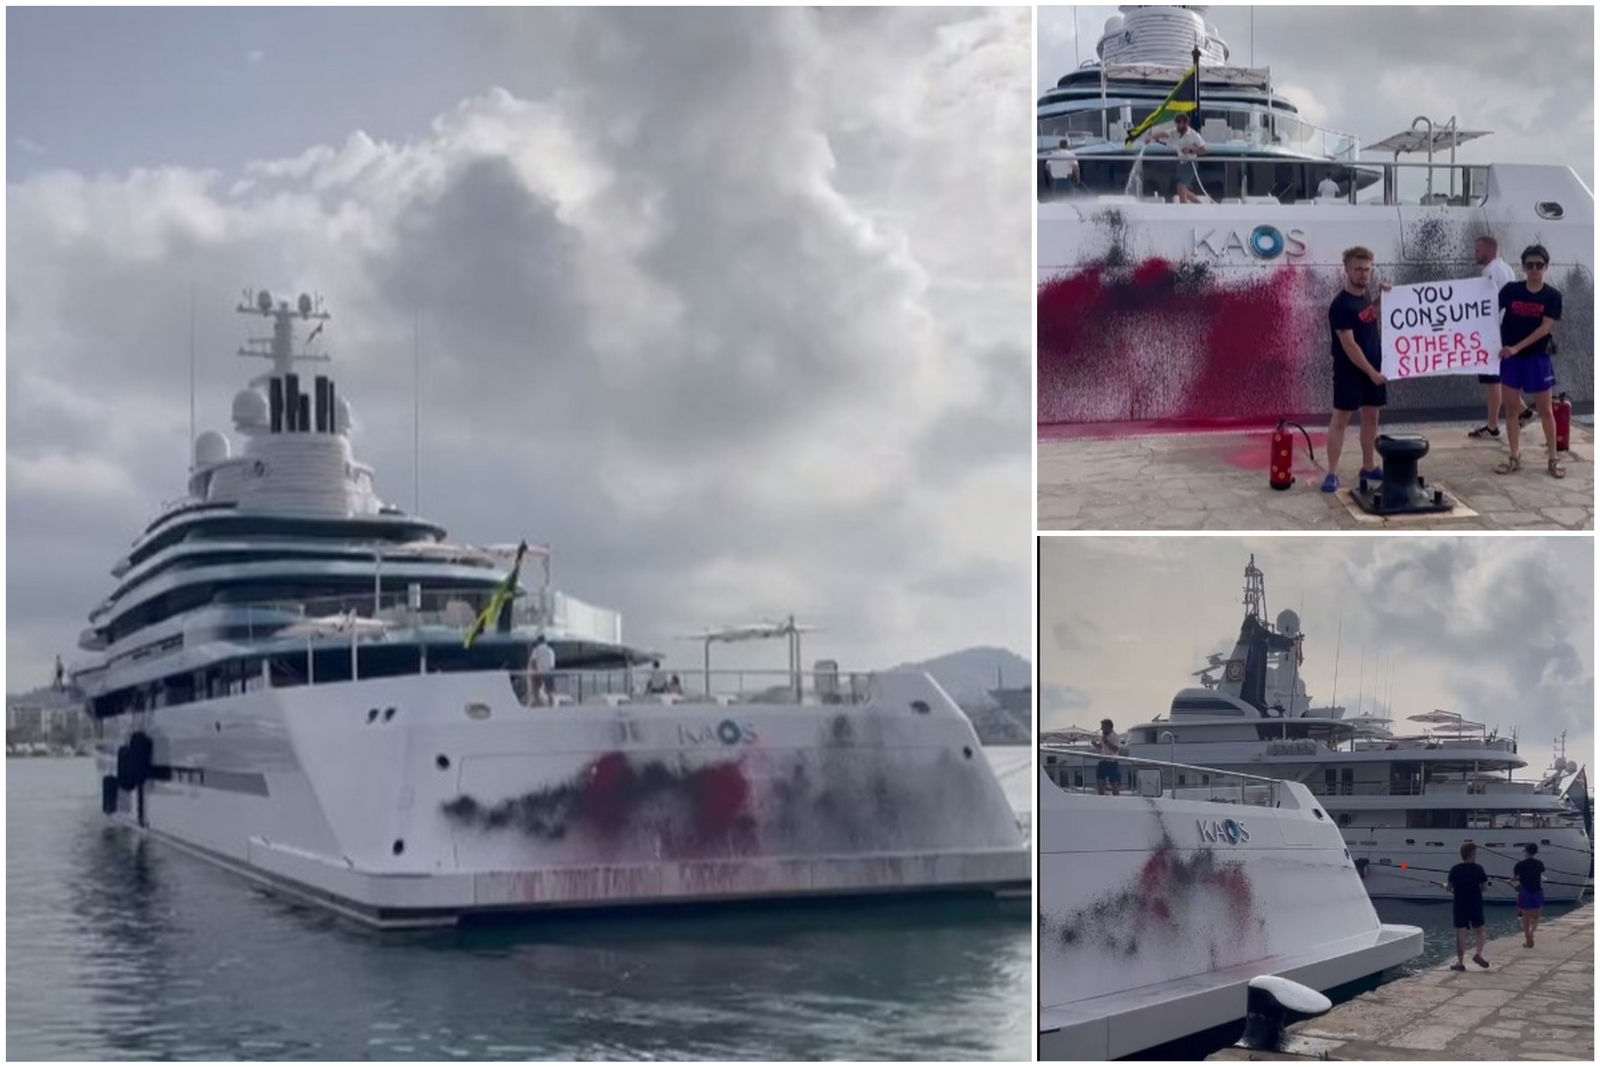 superyacht kaos vandalized